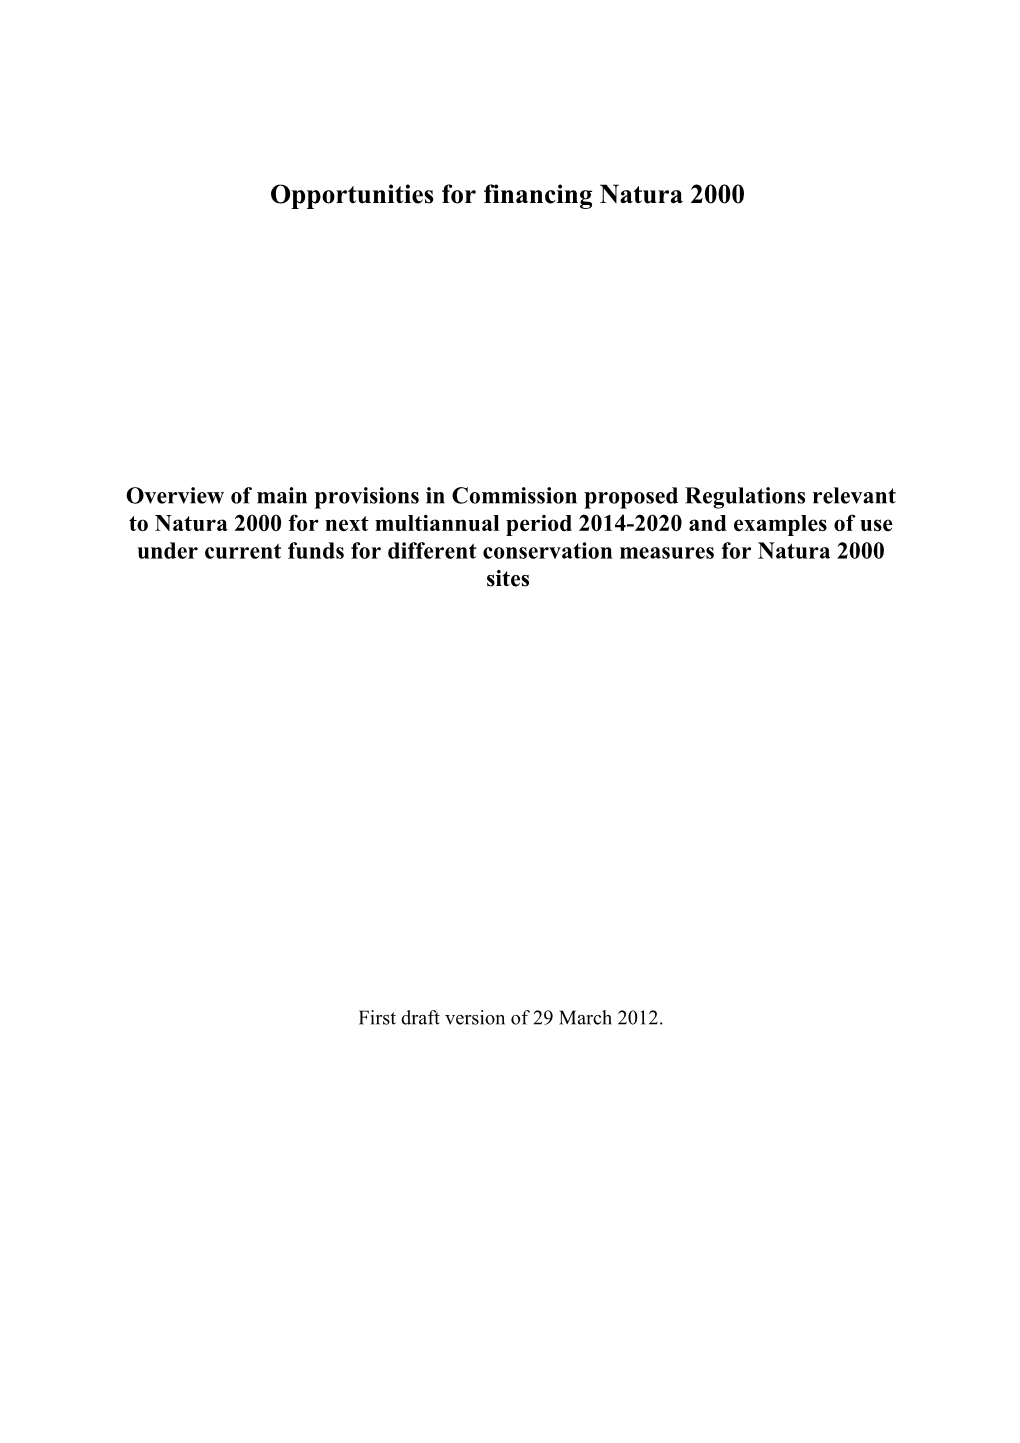 Financing Natura 2000 for Financial Framework 2014-2020